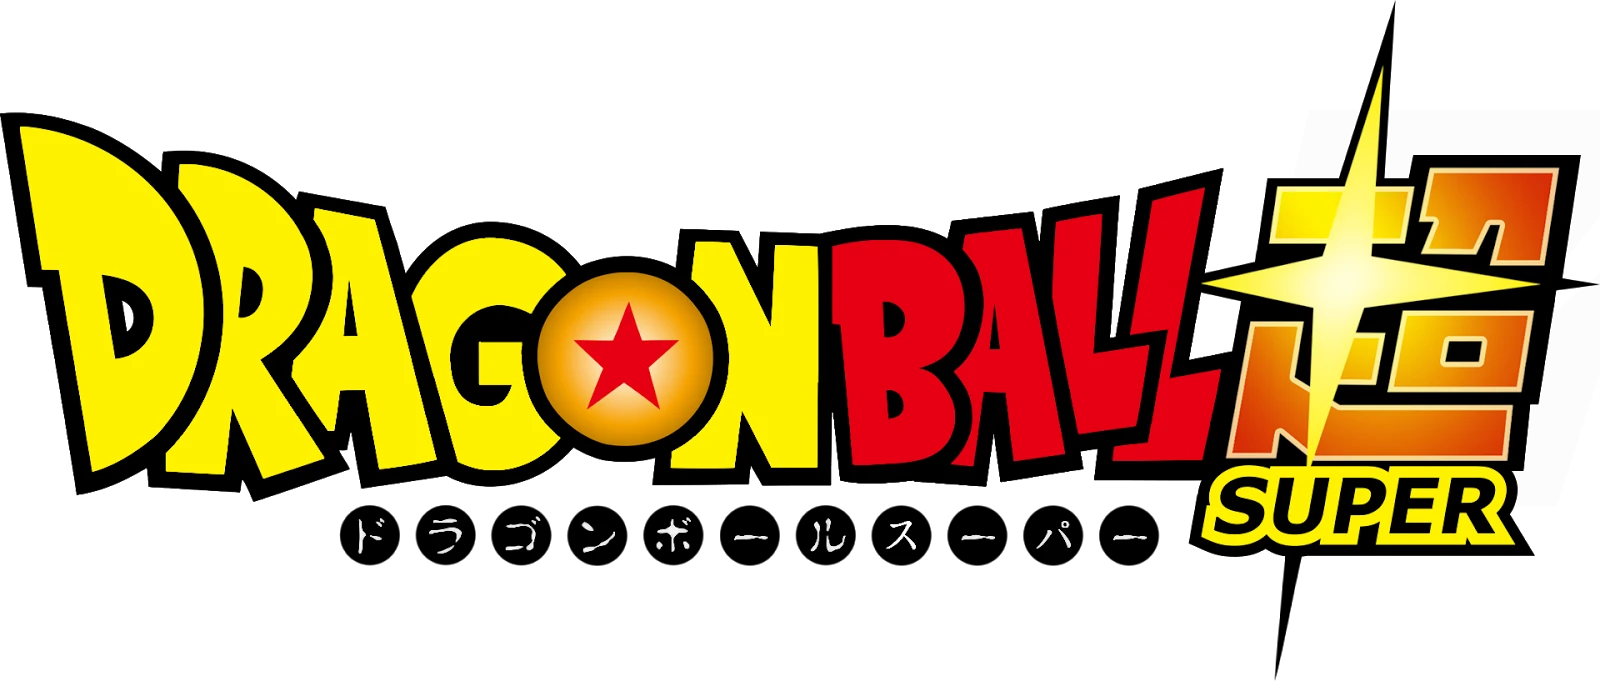 Son Goku (Super Dragon Ball Heroes), Wiki Dynami Battles